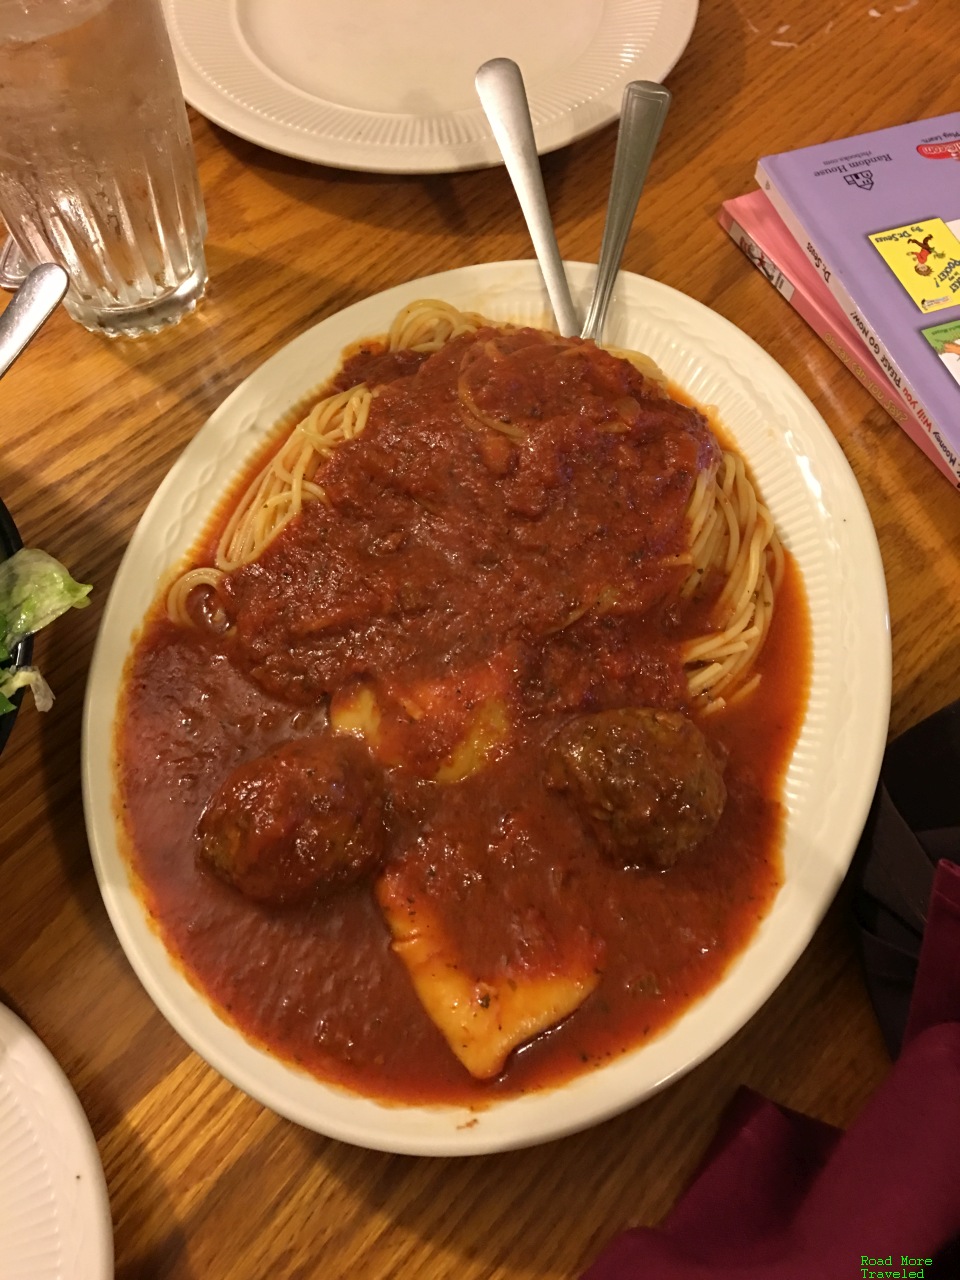 Pete's Place spaghetti, meatballs, and ravioli